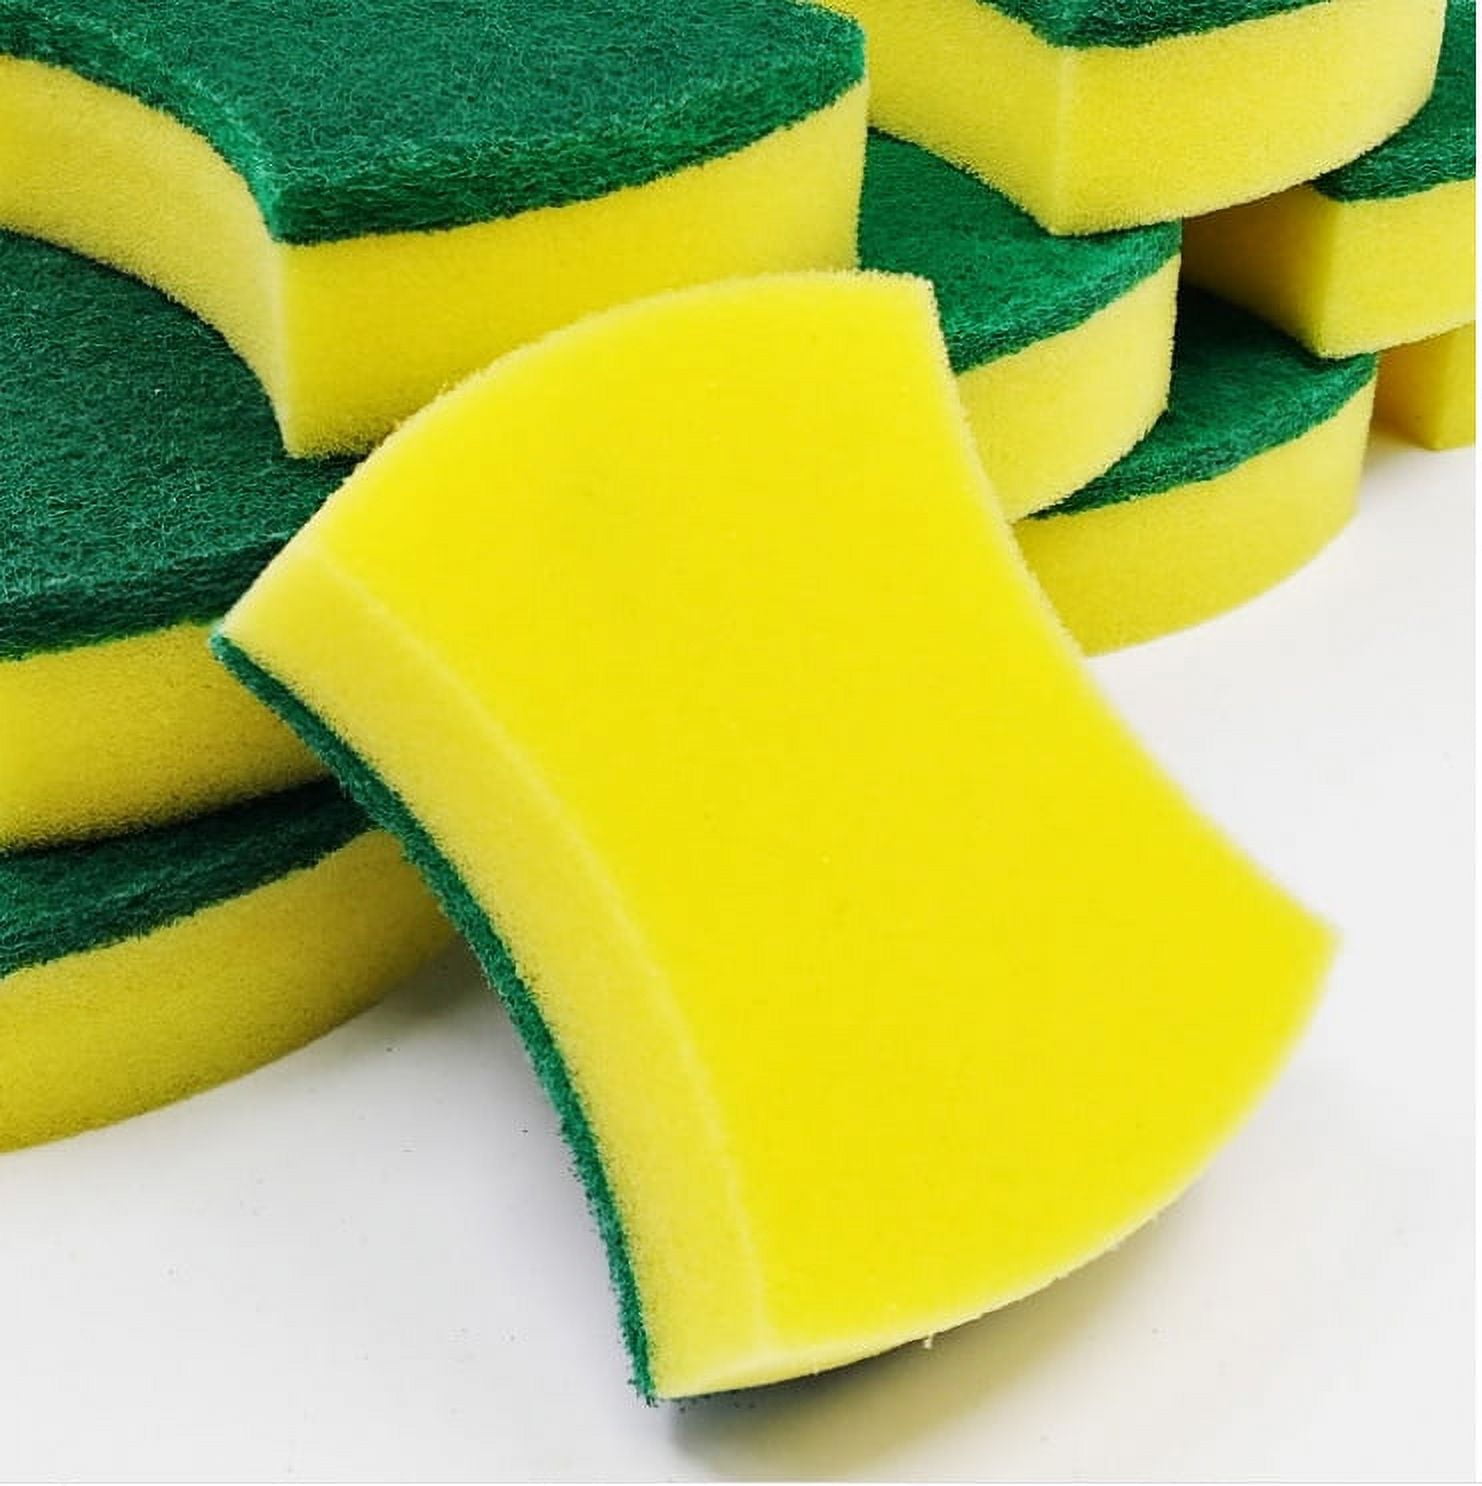  Liphontcta WIHQIBVCE 4 Sponges for Scrub Cleaning